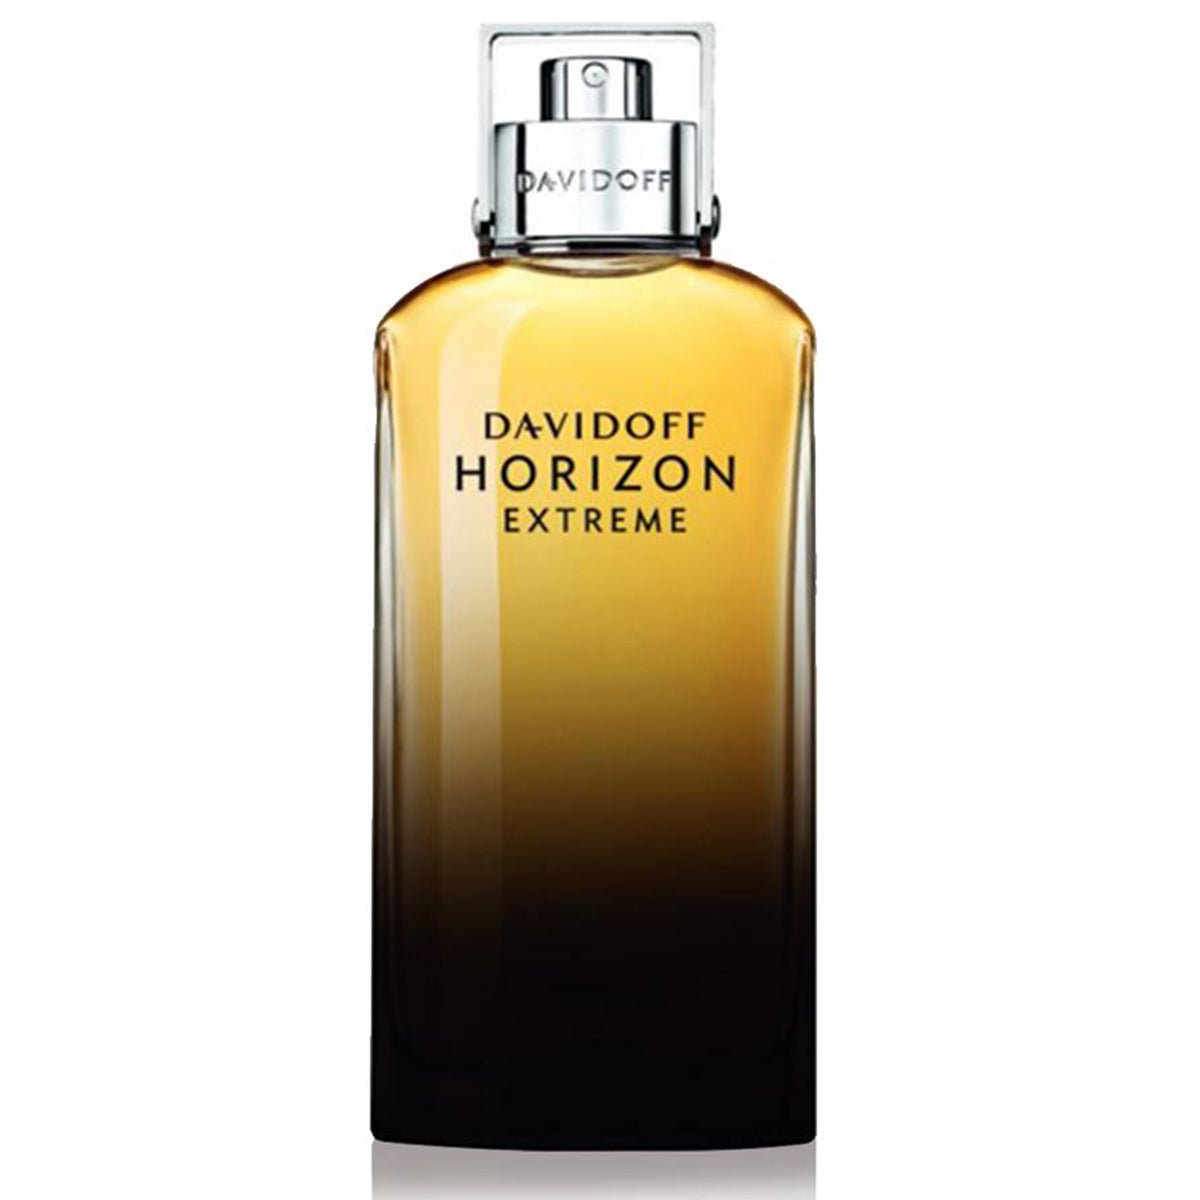 Davidoff Horizon Extreme Perfume Edp For Men 125 Ml-Perfume - AllurebeautypkDavidoff Horizon Extreme Perfume Edp For Men 125 Ml-Perfume